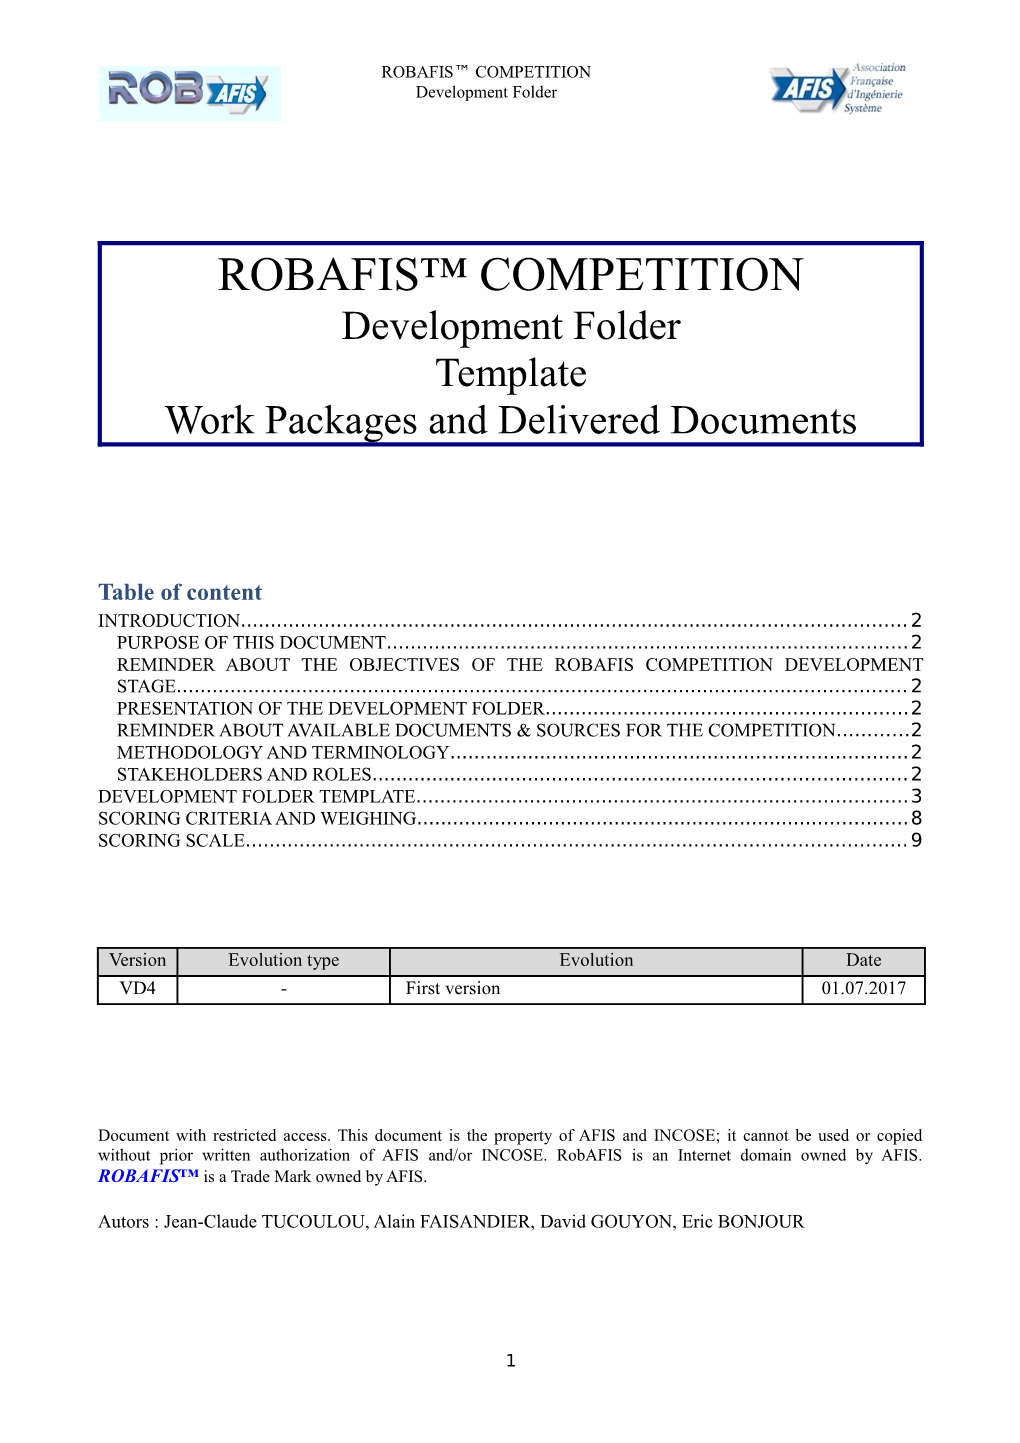 Robafis Development Folder